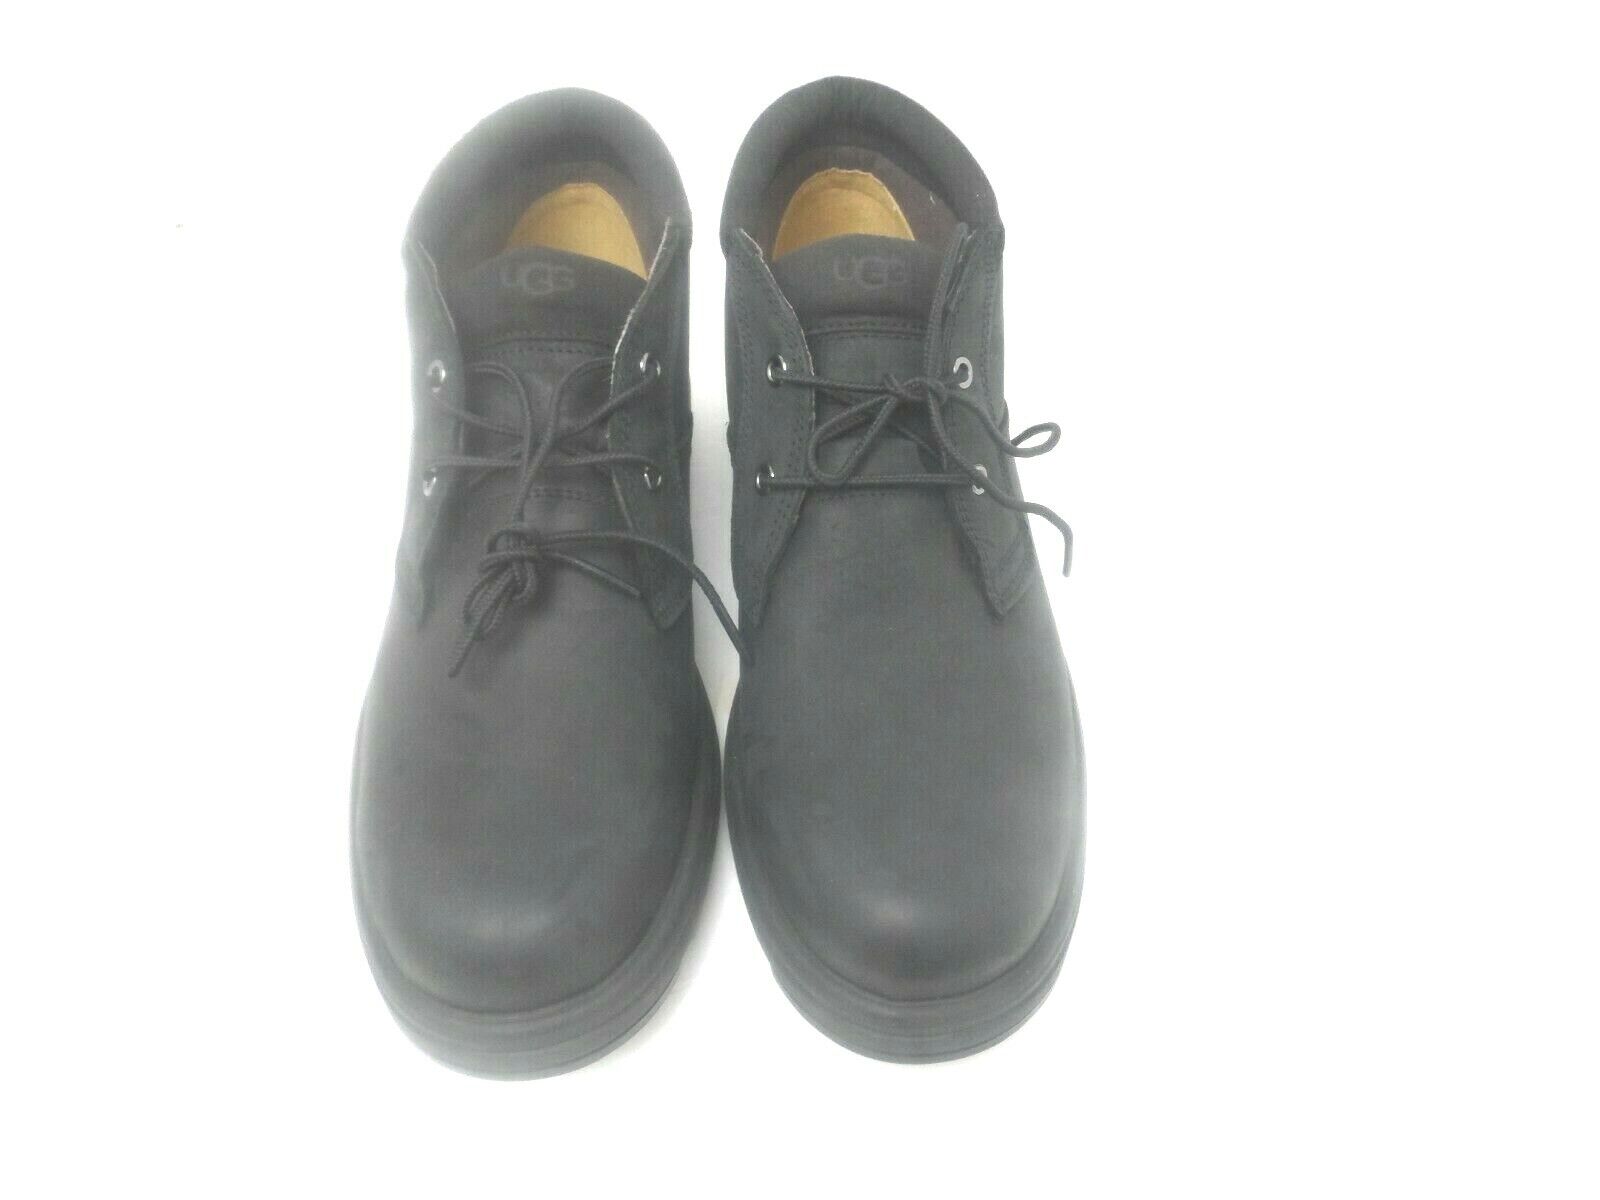 UGG Men Biltmore Chukka Black Leather Waterproof Shoe Boots - Size 11 - NEW Zdjęcie NOWOŚĆ